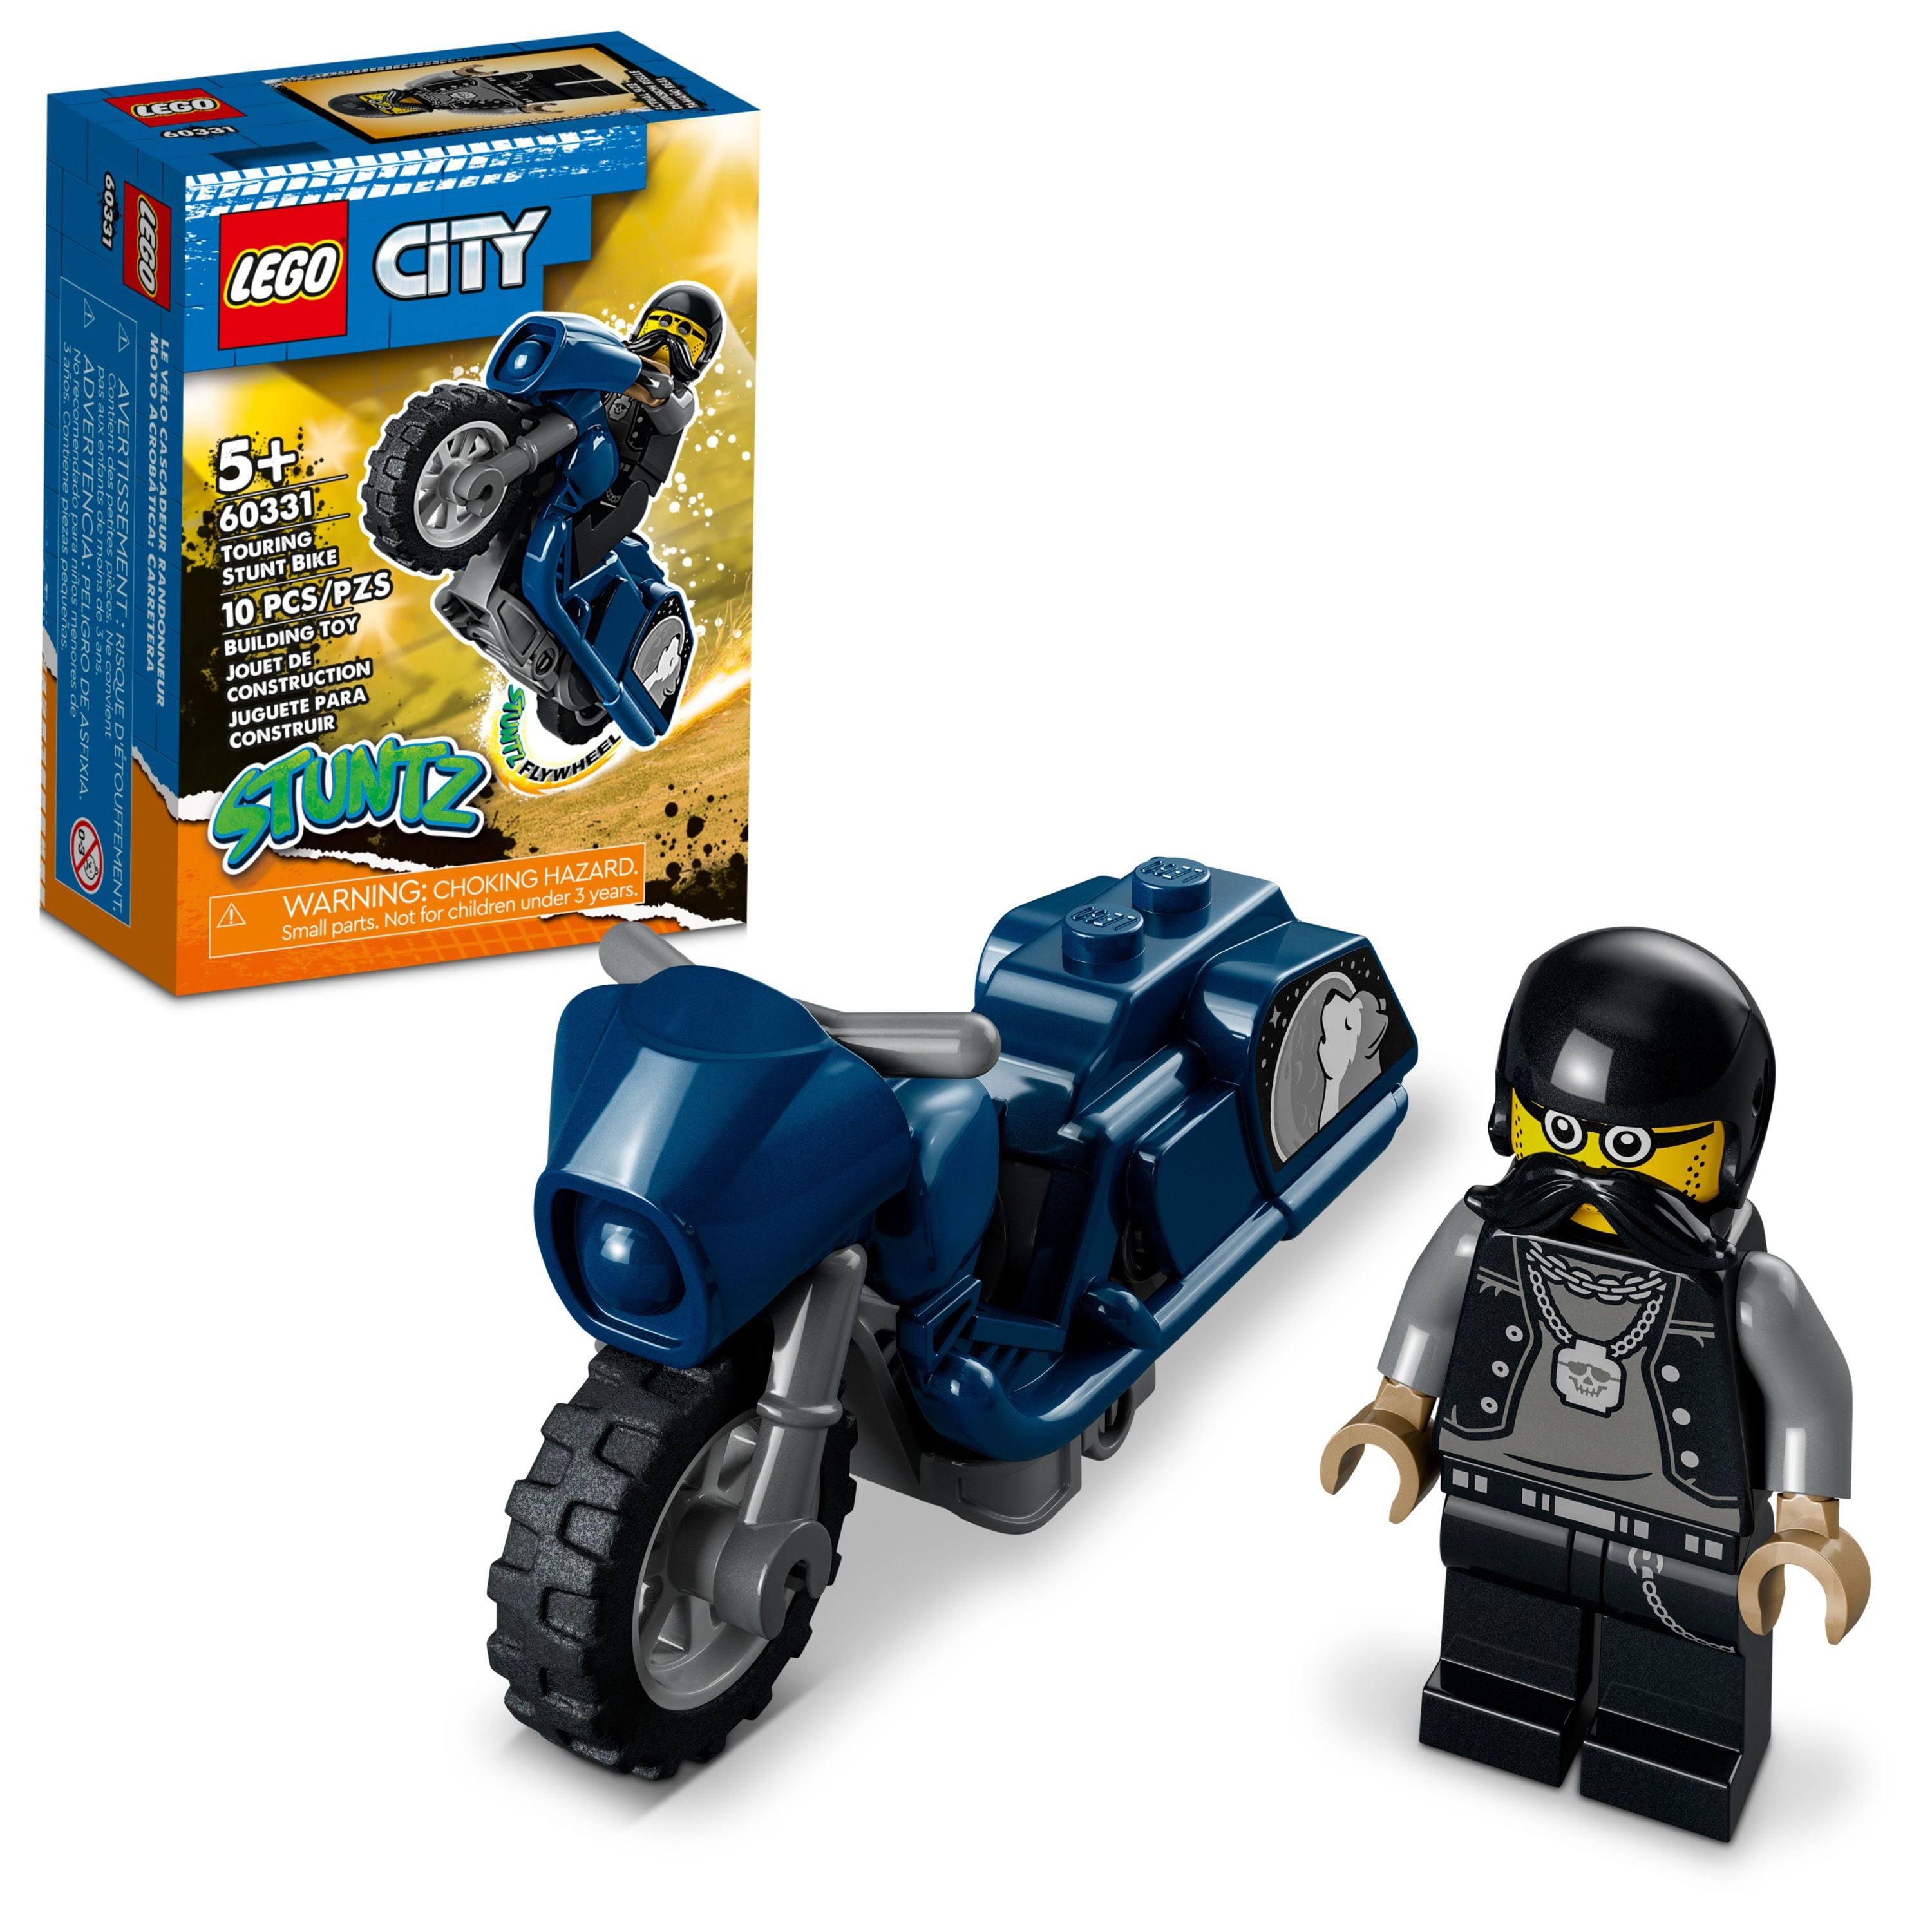 LEGO City Touring Stunt Bike - 60331